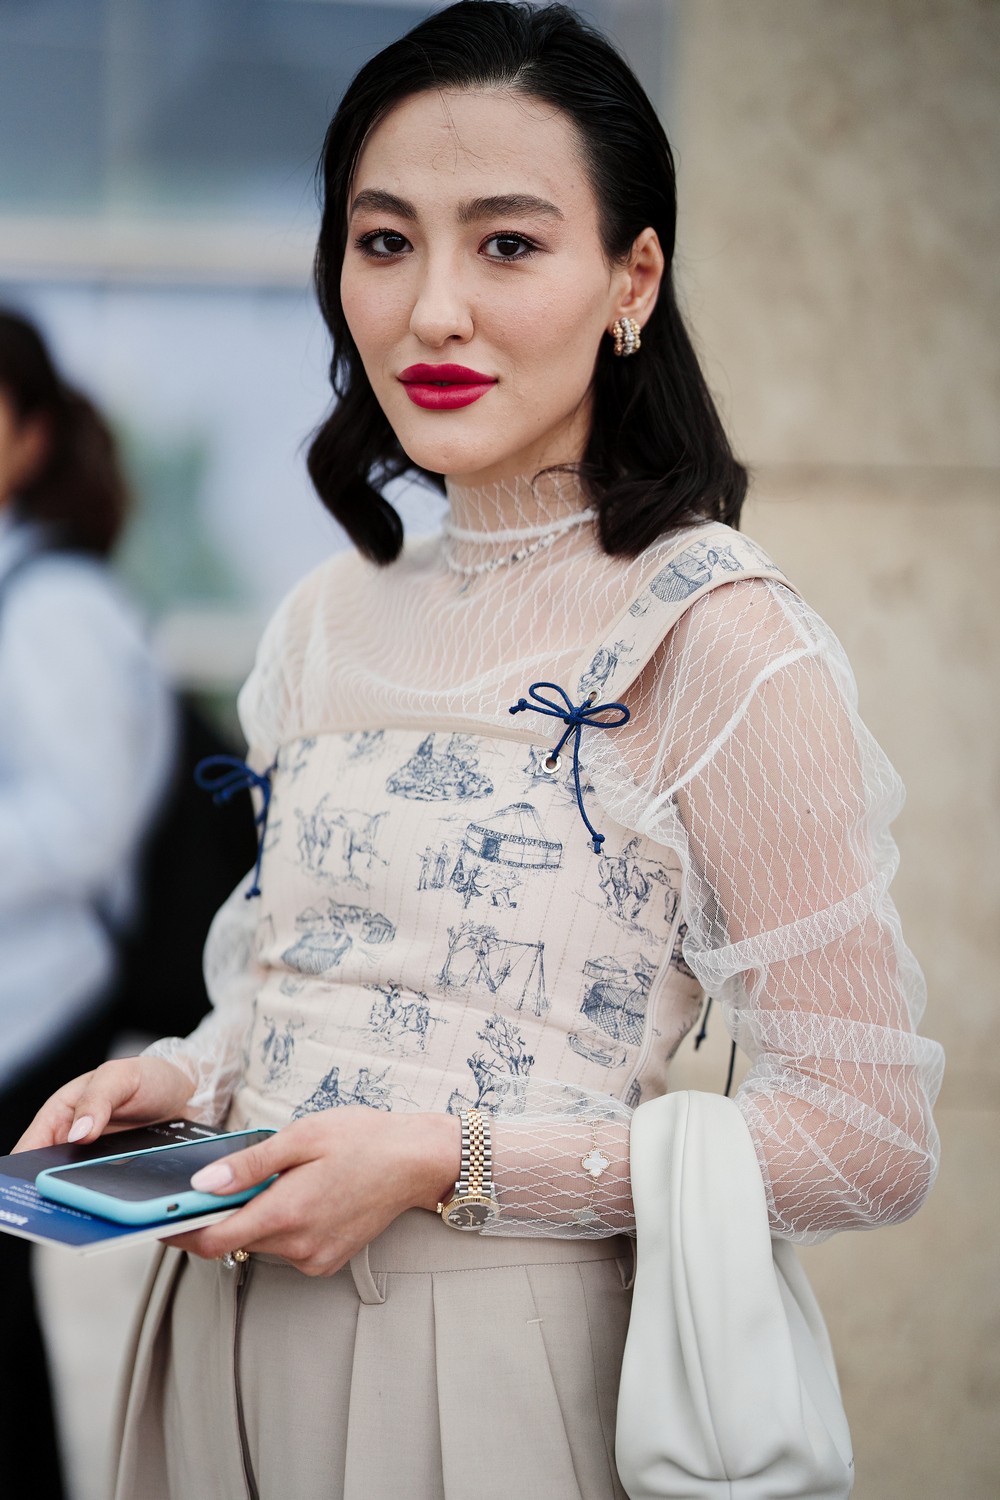 Visa Fashion Week Almaty